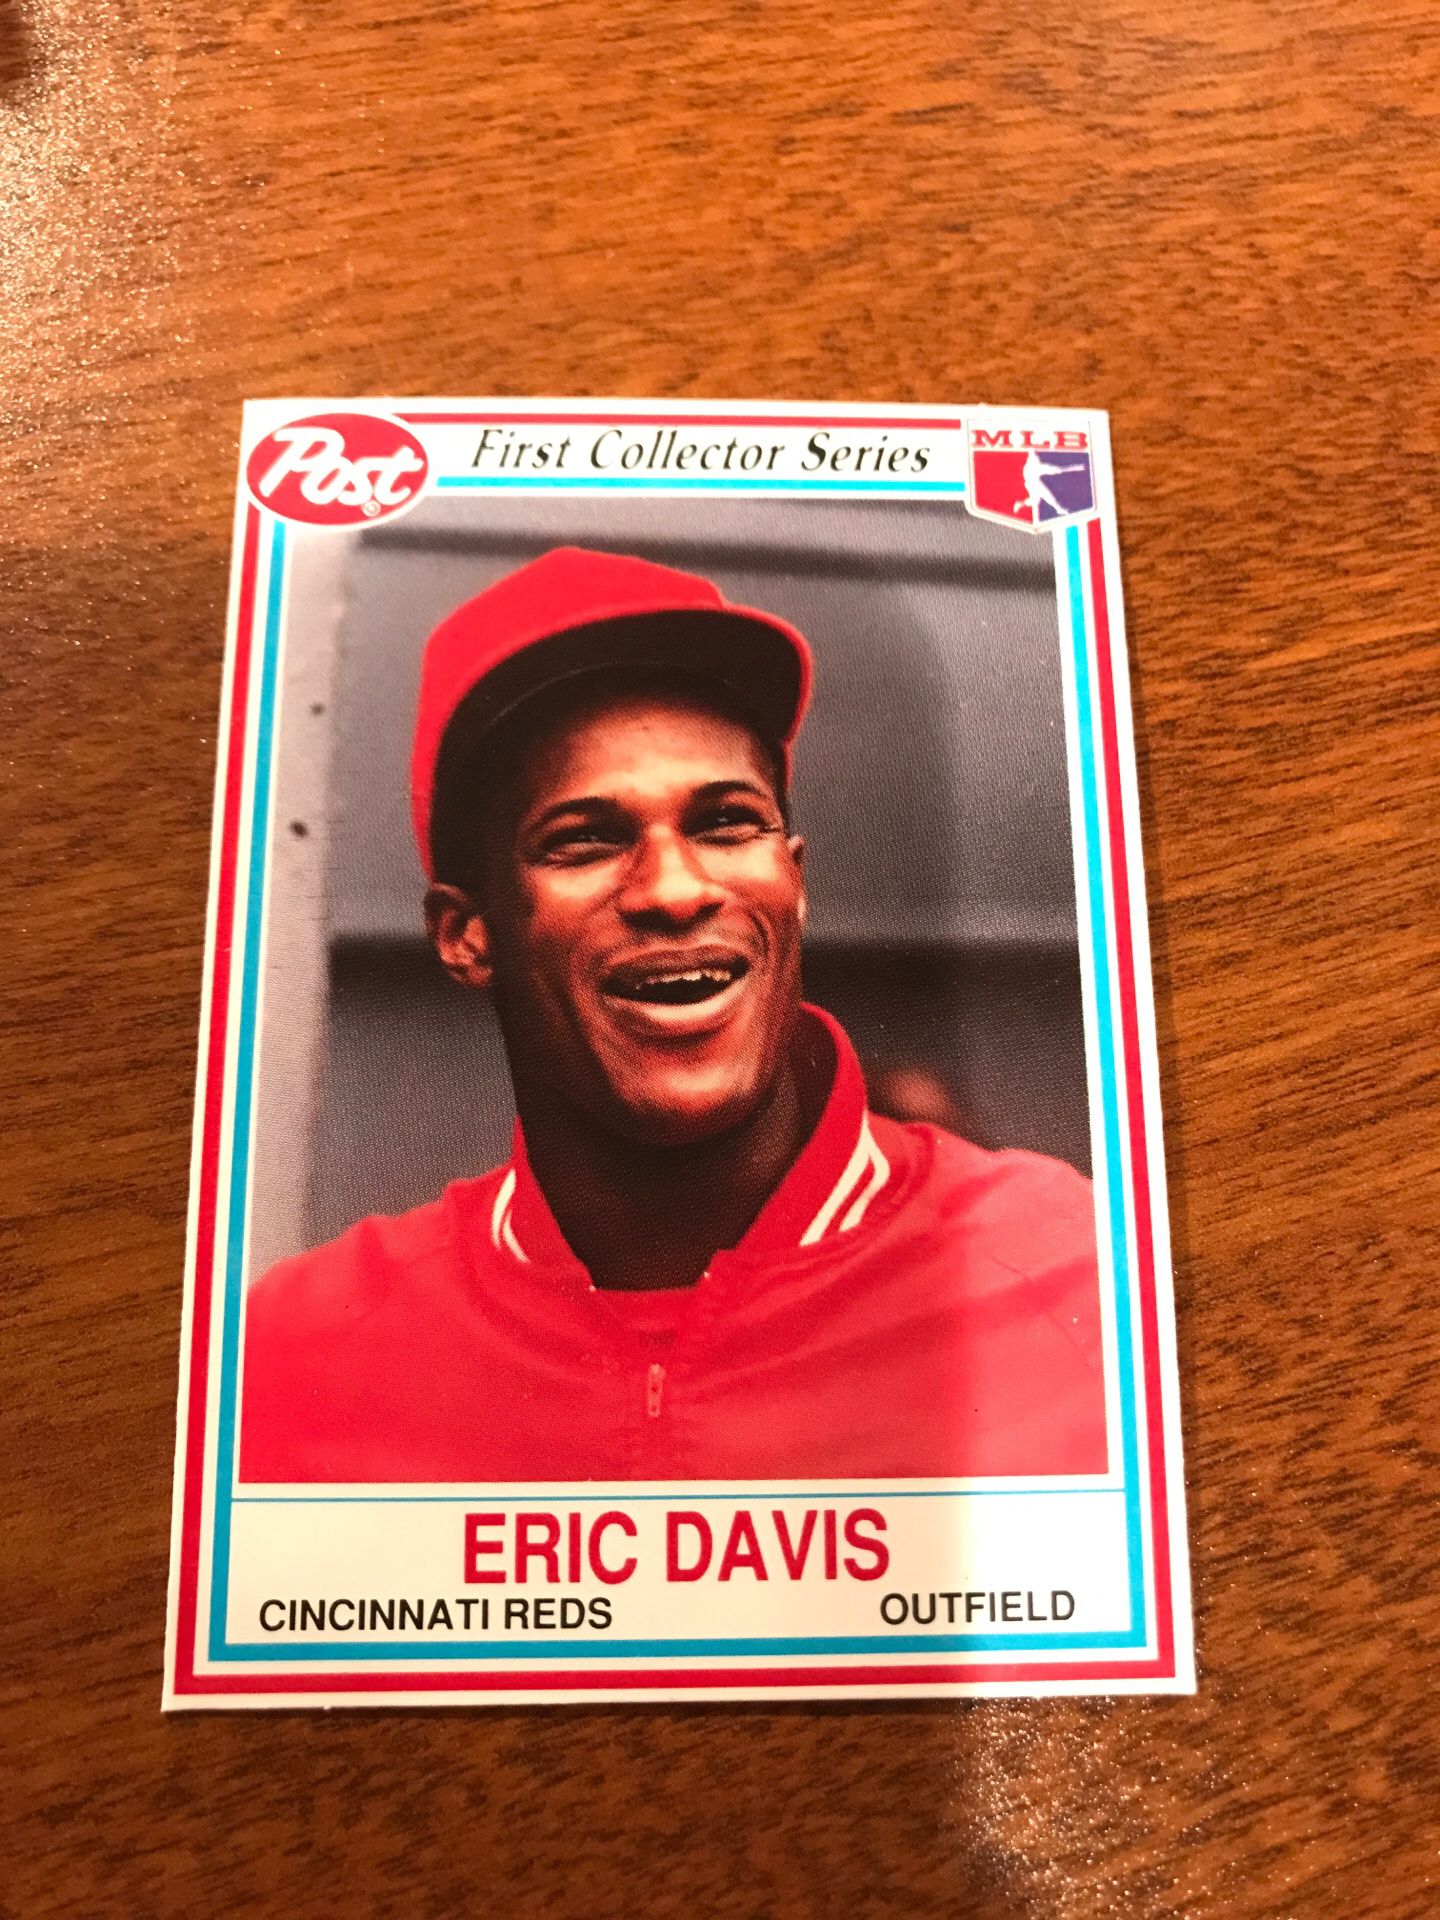 1990 Post Cereal Eric Davis Cincinnati Reds Baseball card